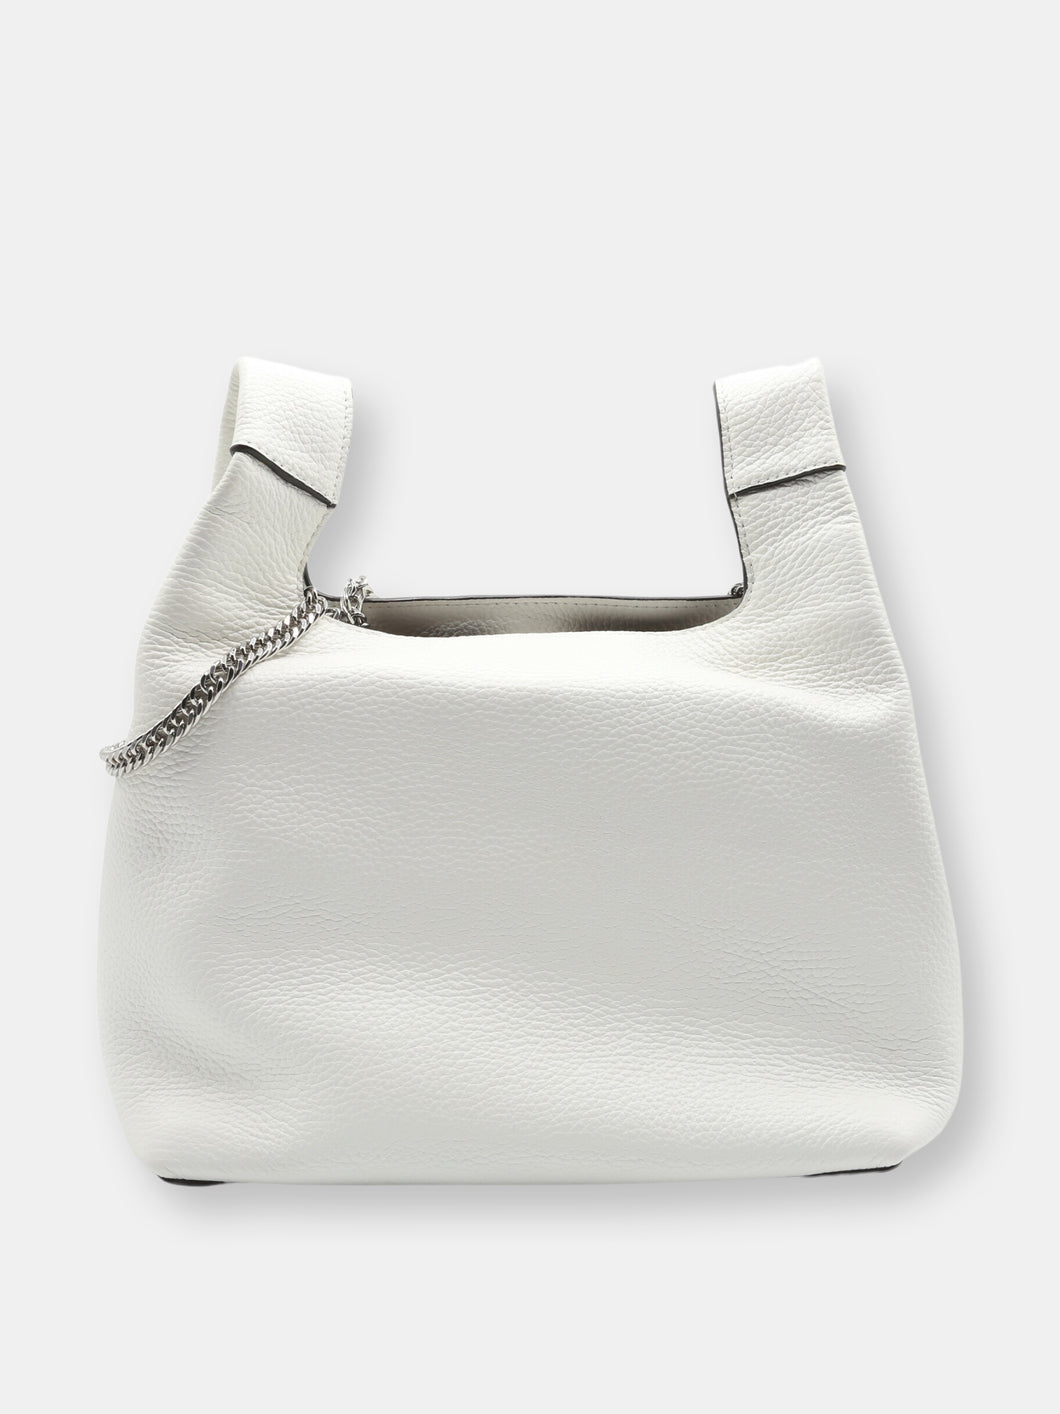 Hayward Women's Chain Leather Top Handle Bag Top-Handle